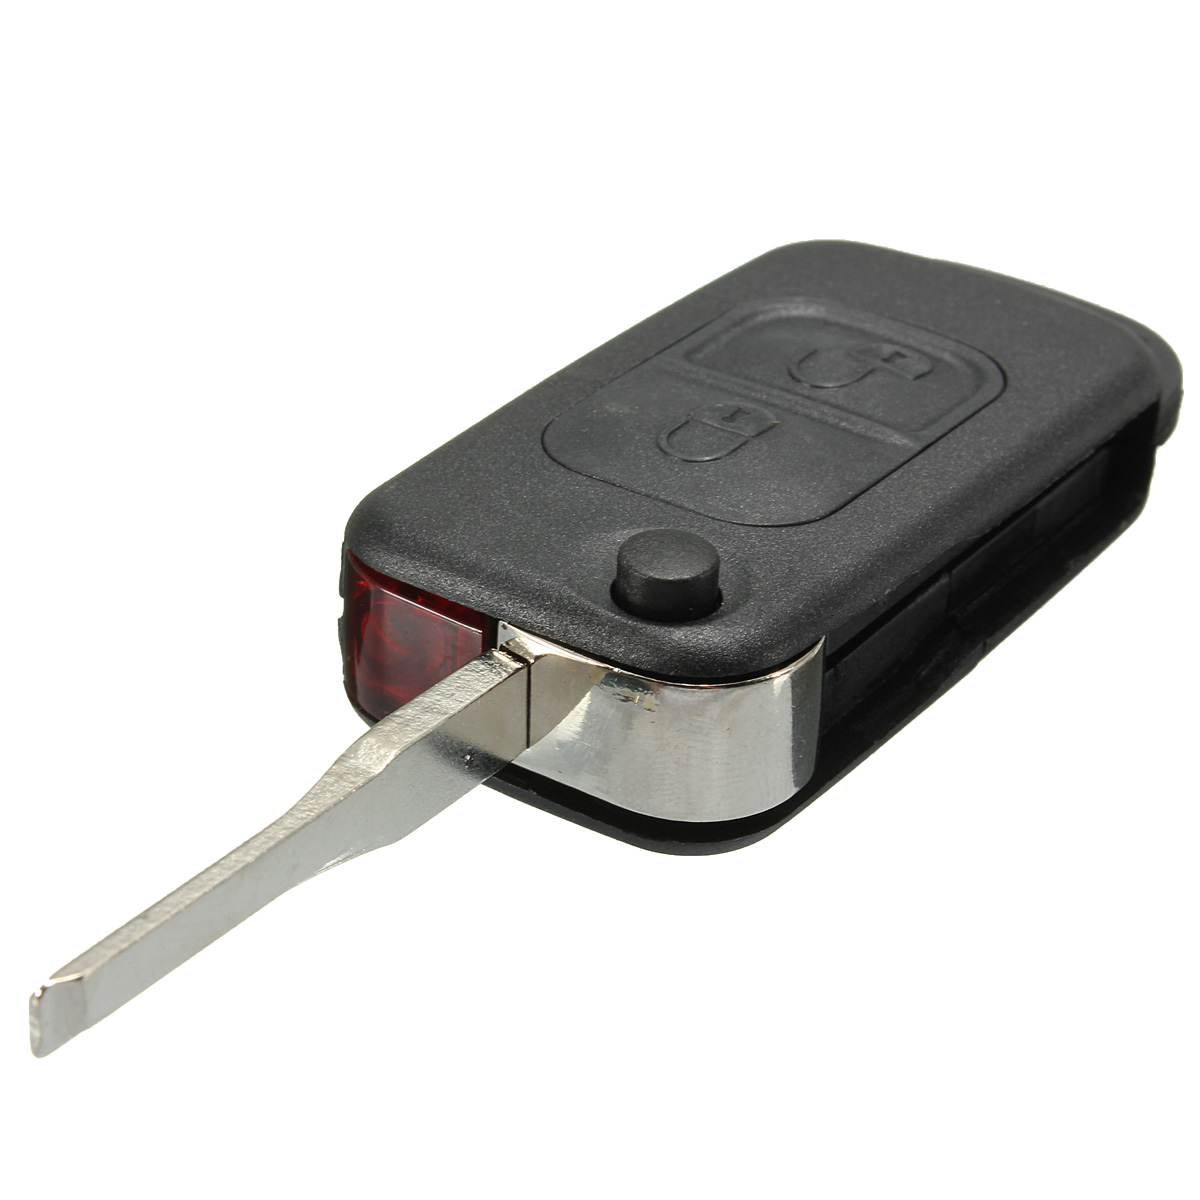 Mercedes switchblade key #1